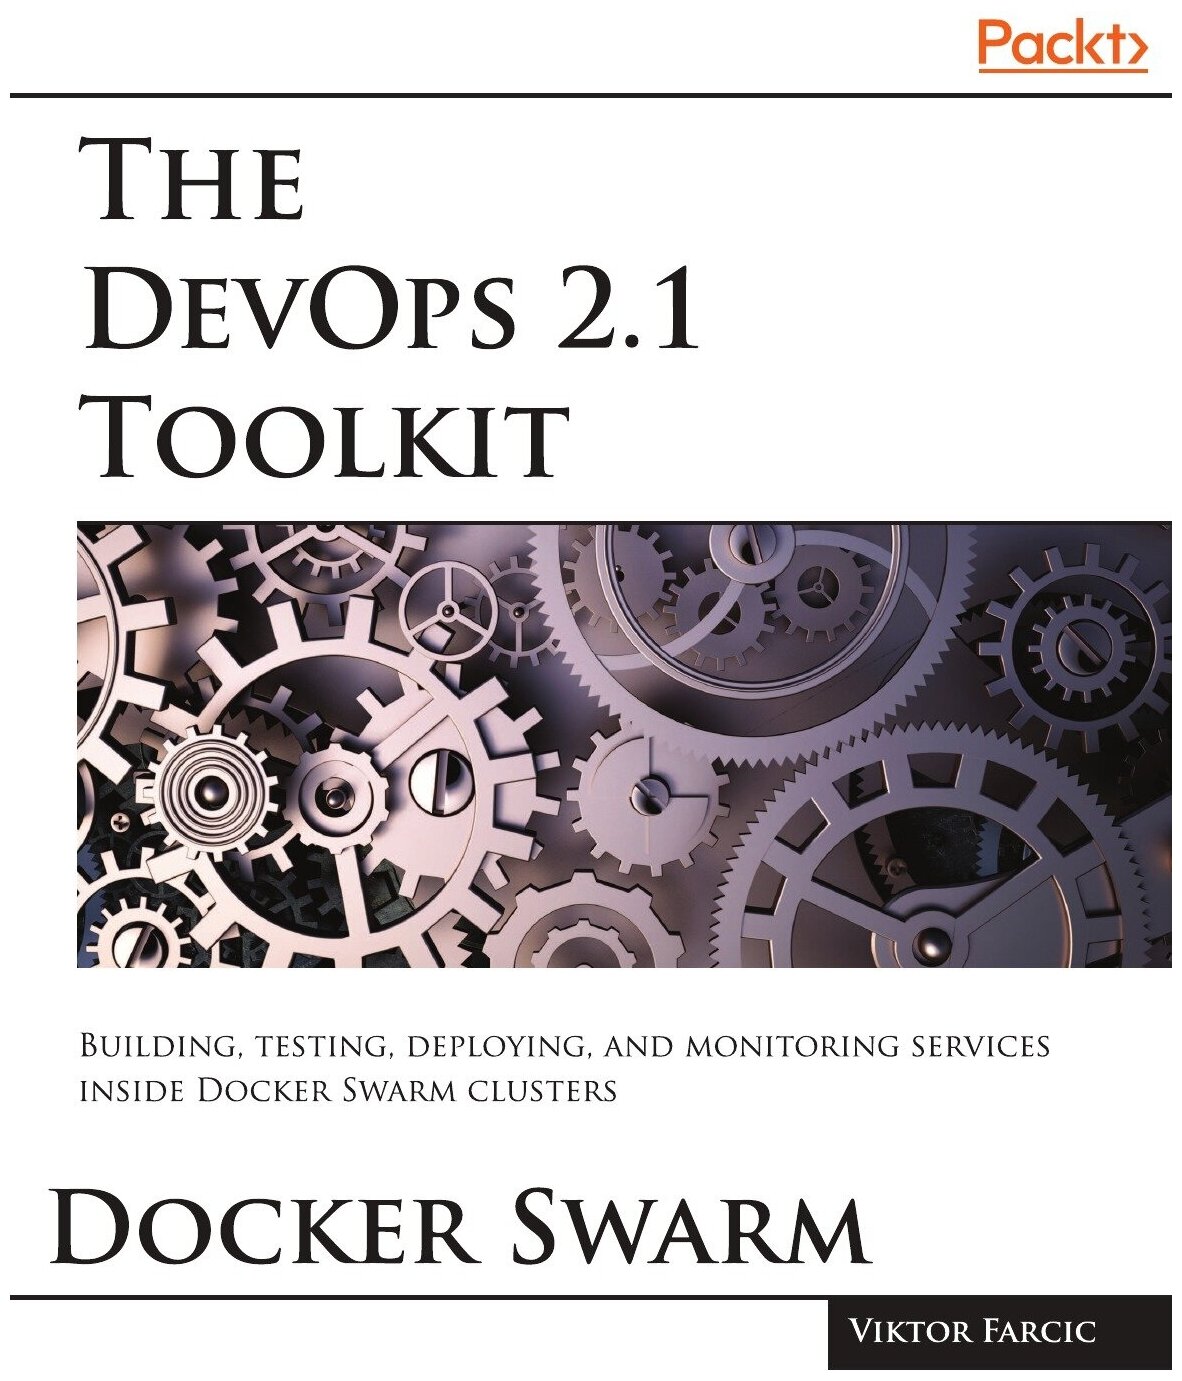 The DevOps 2.1 Toolkit. Docker Swarm